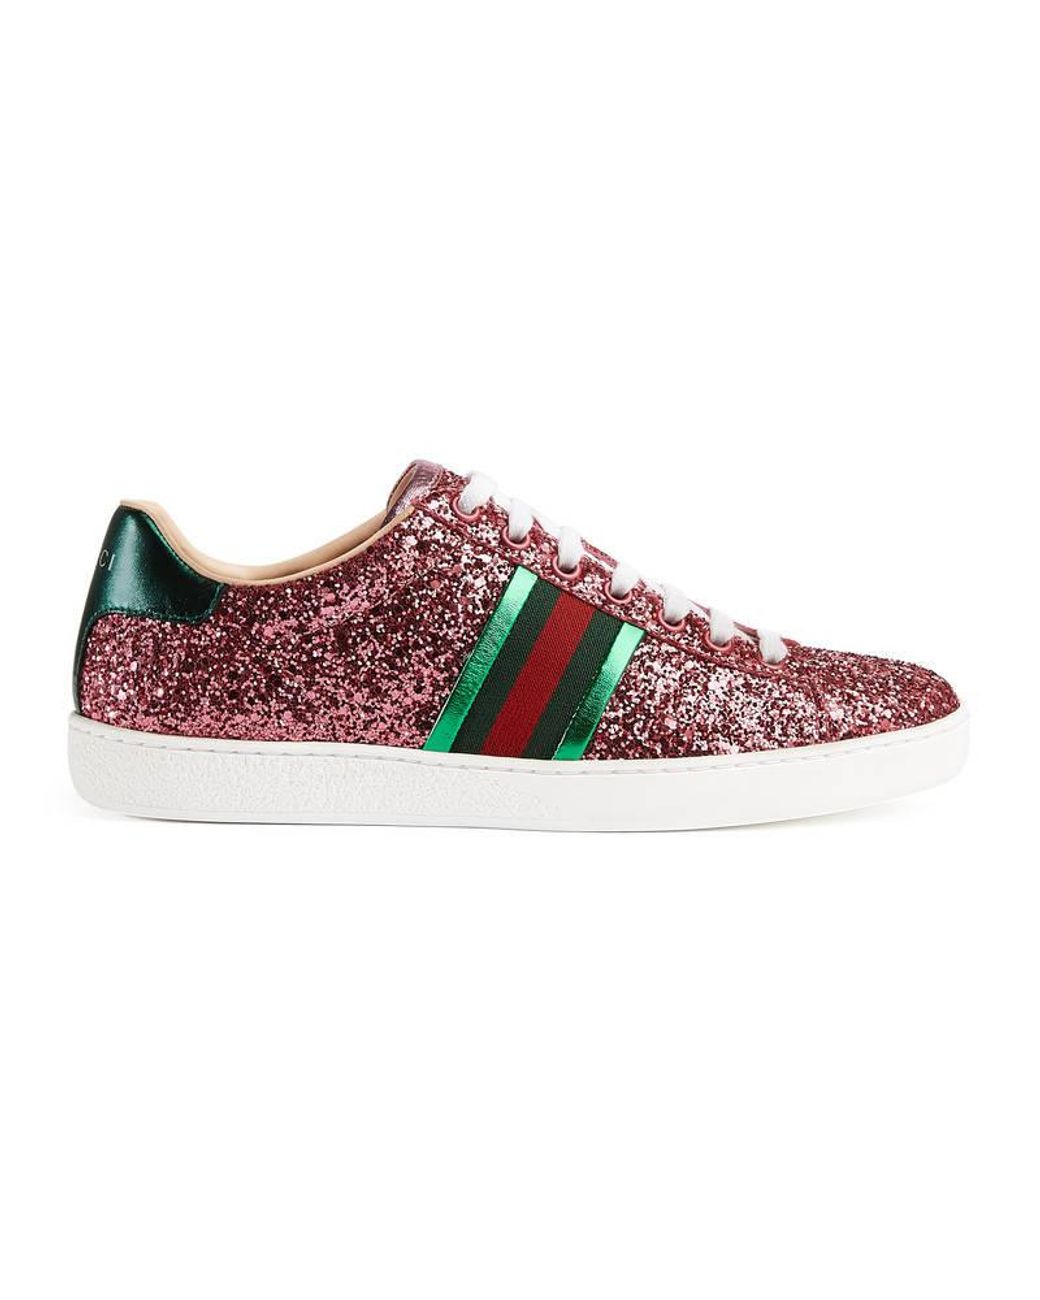 Gucci Ace Glitter Low-top Sneaker in Pink | Lyst